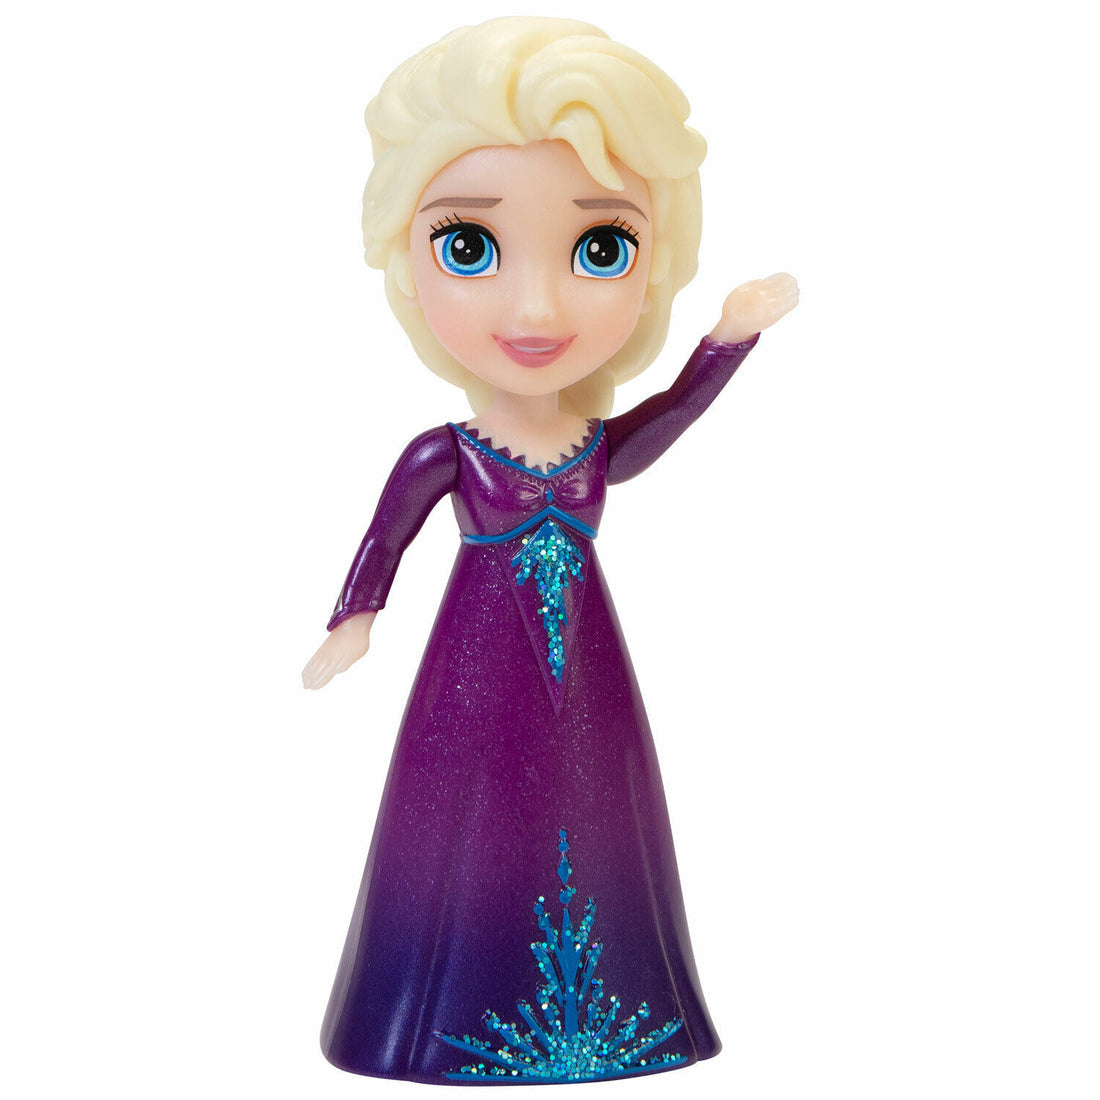 Disney Mini 3-Inch Toddler Dolls - Pick Your Favorite! - Elsa (Purple Dress) (Frozen 2)